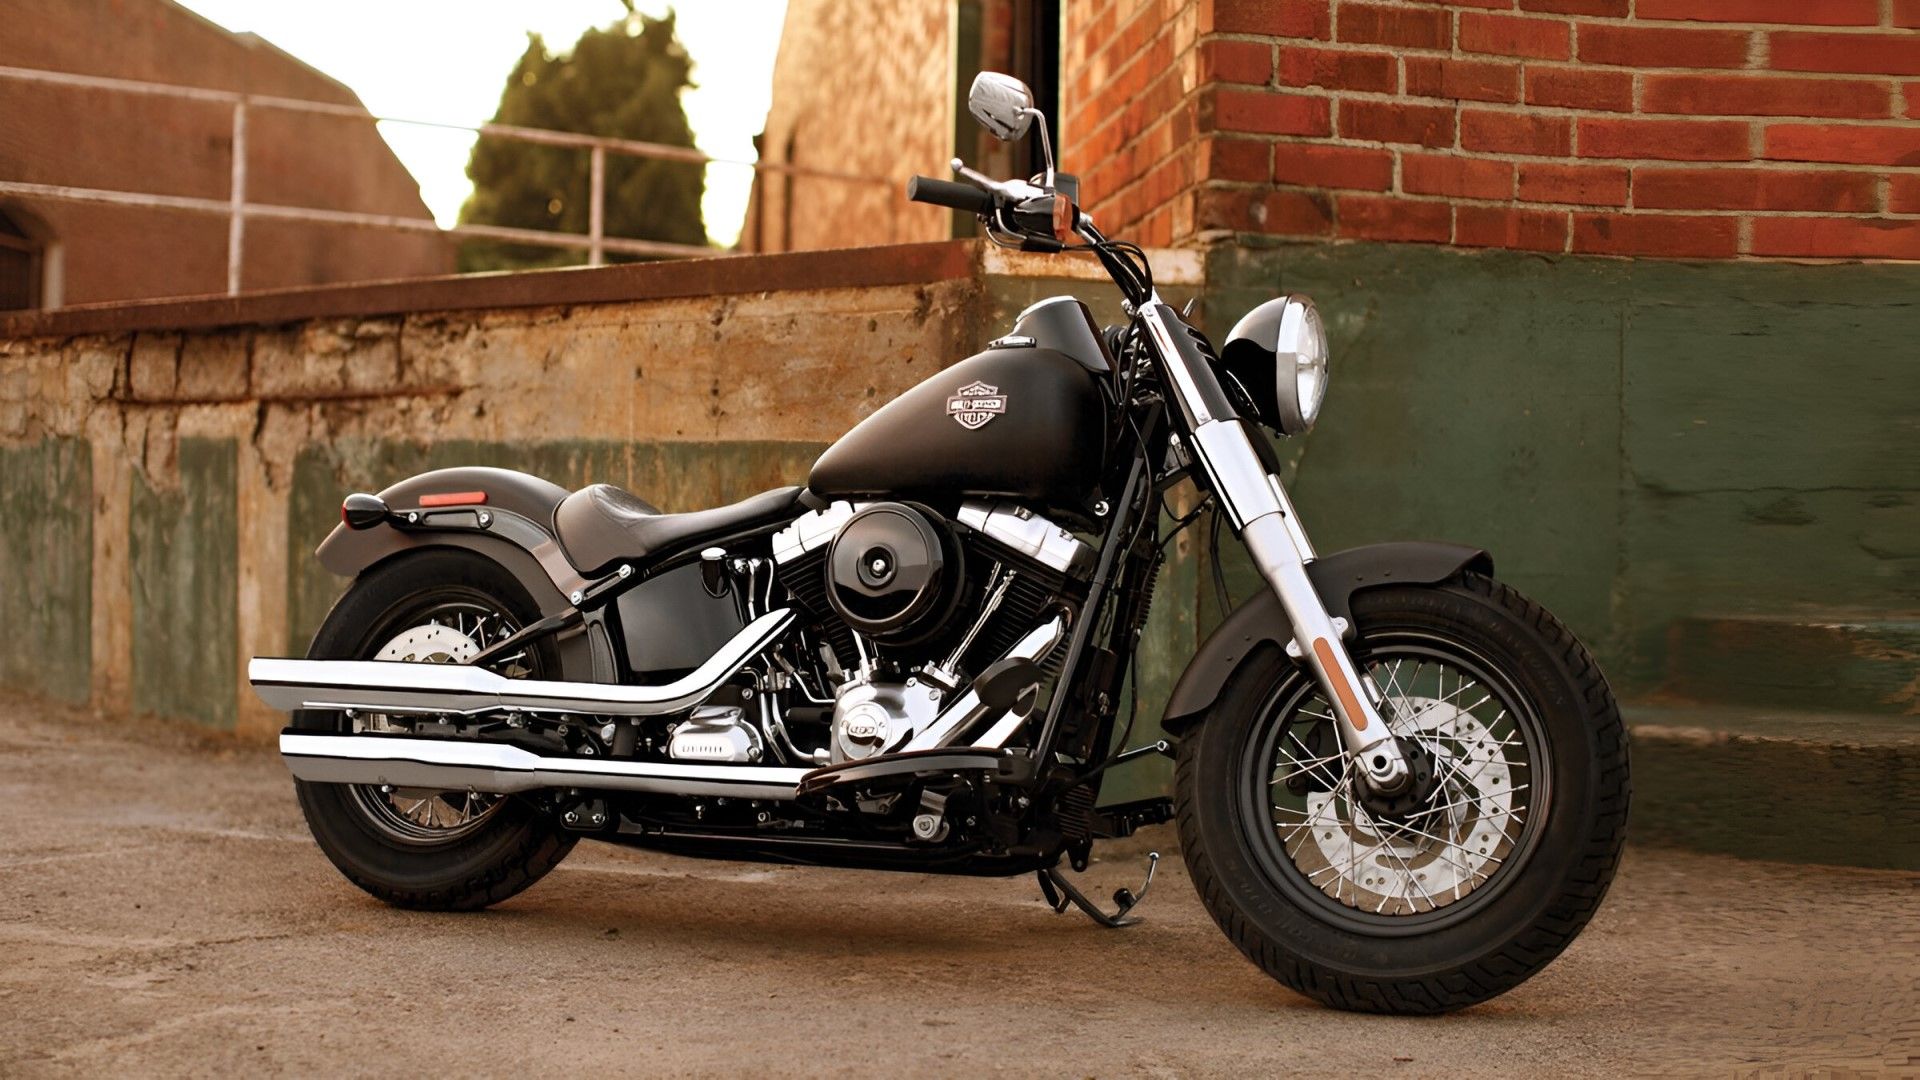 Captain America’s 2012 Harley-Davidson Softail Slim